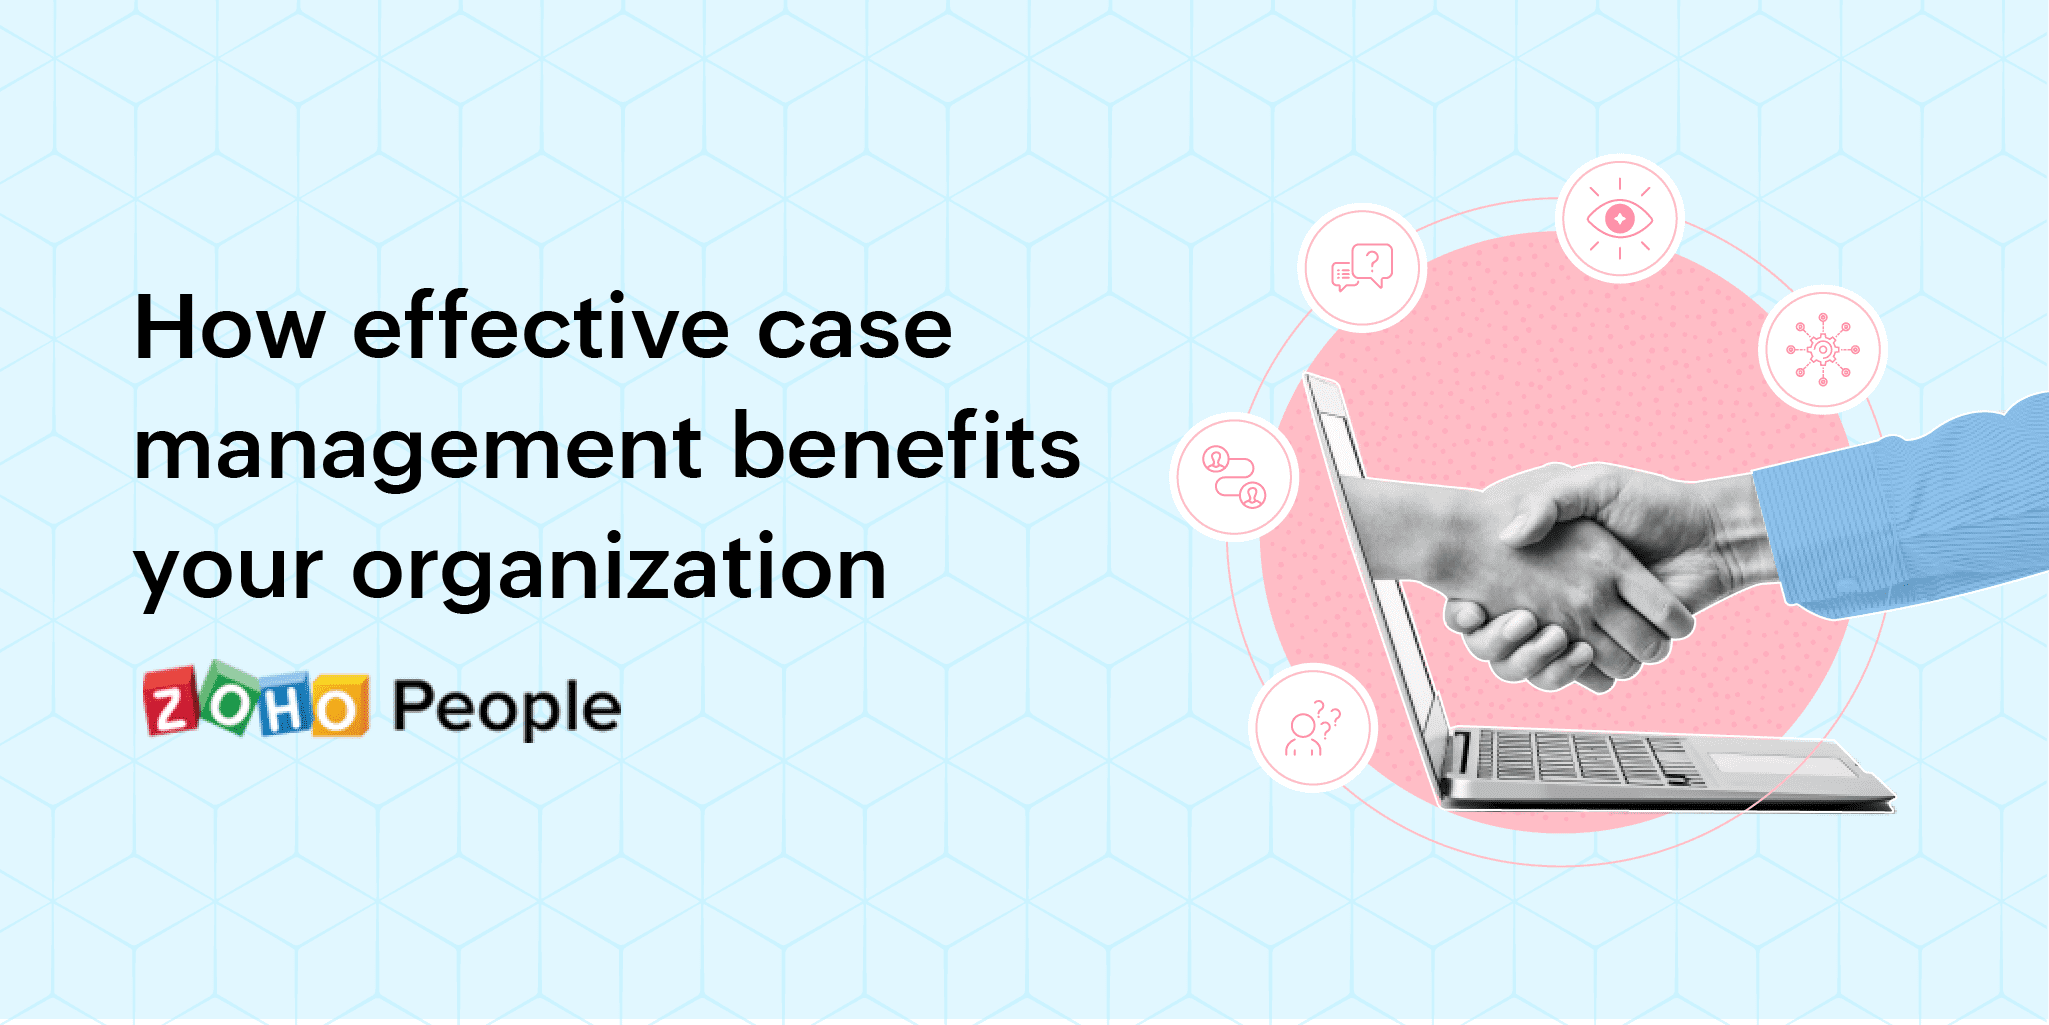 How effective case management benefits organizations